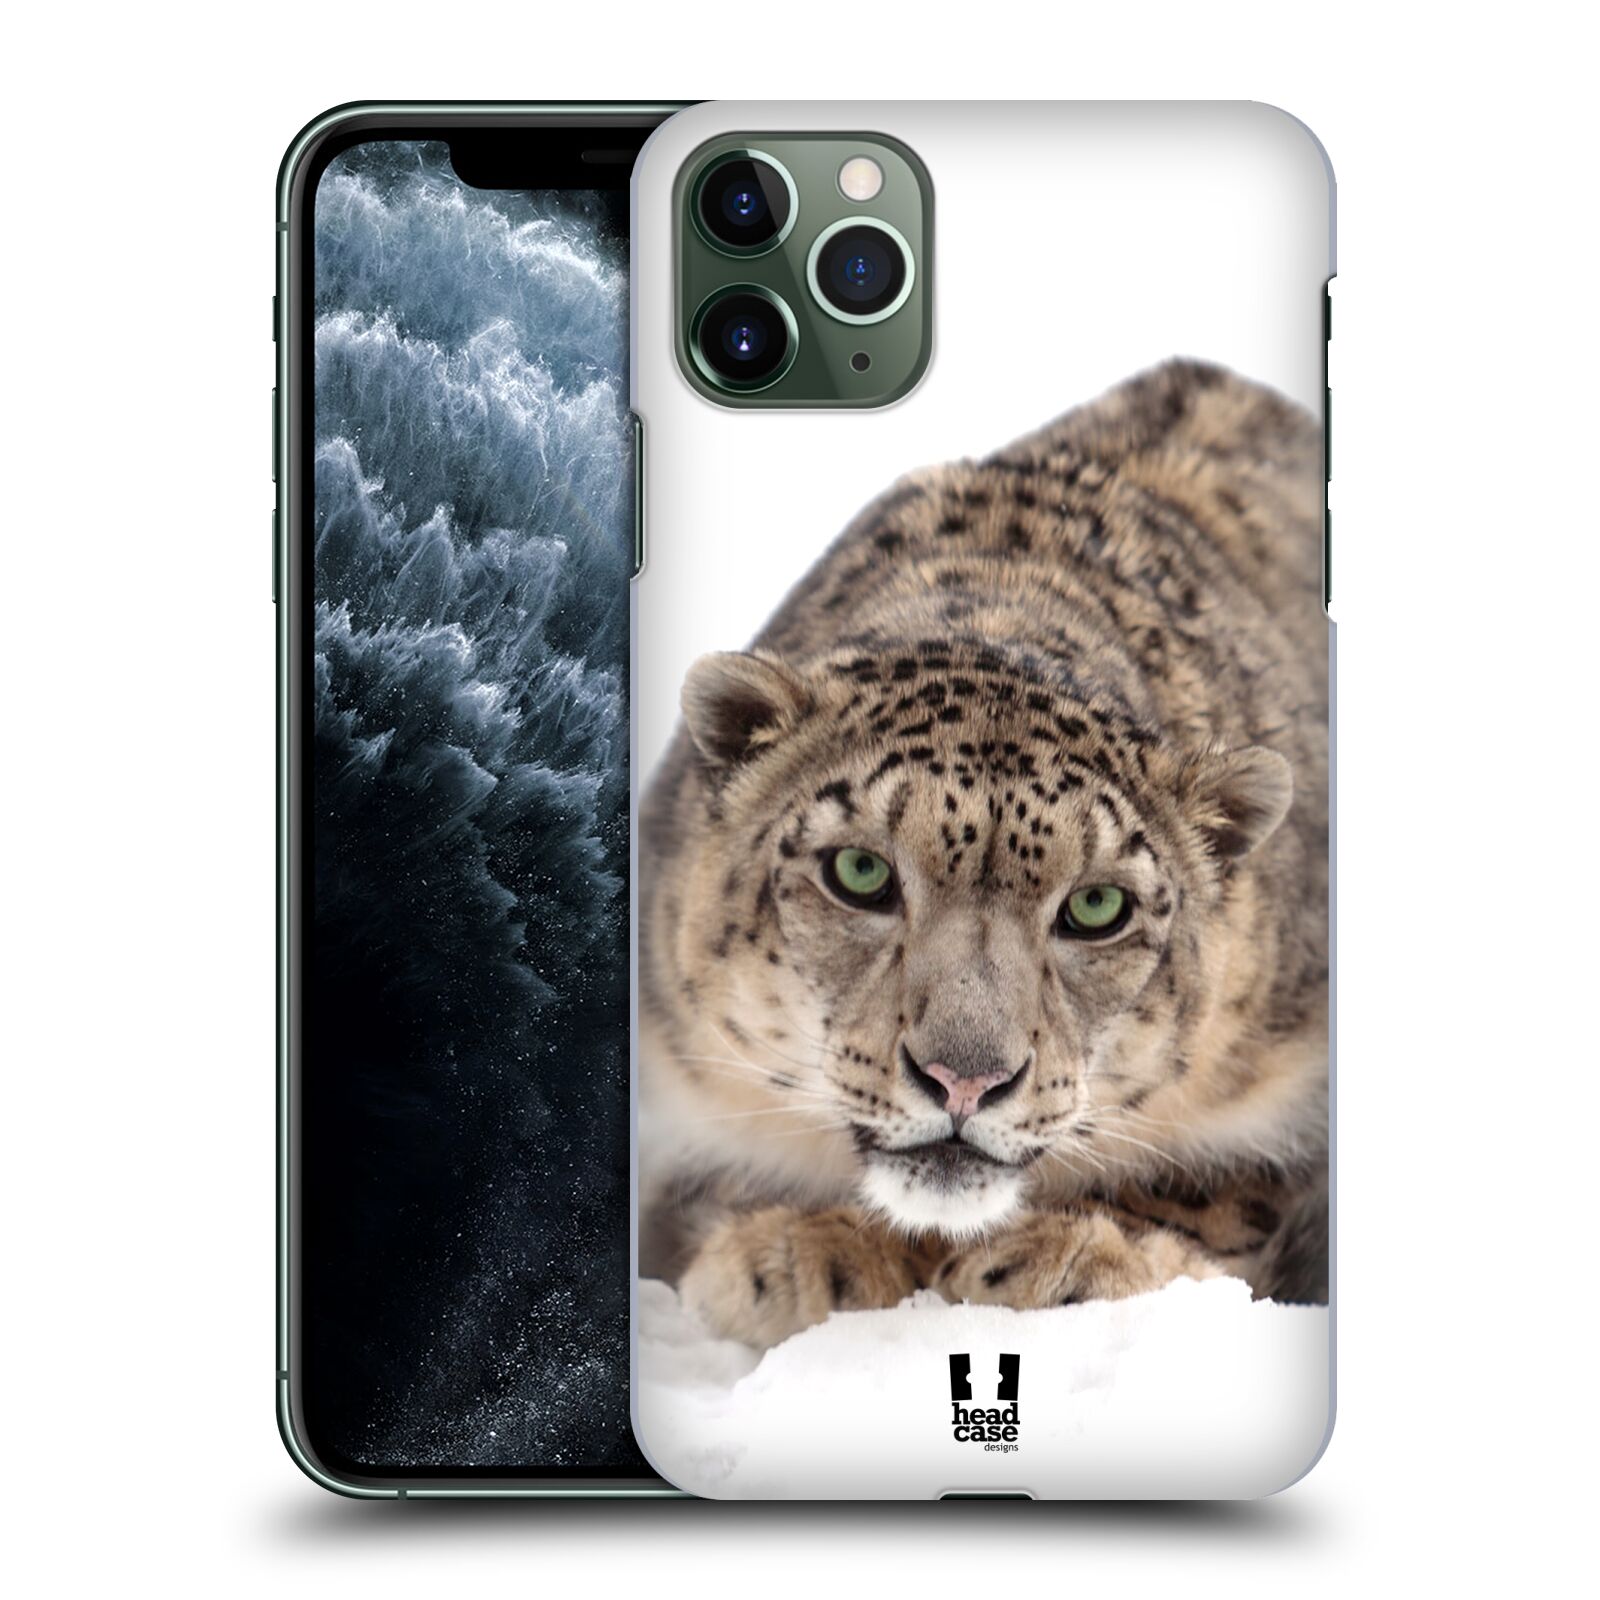 Pouzdro na mobil Apple Iphone 11 PRO MAX - HEAD CASE - vzor Divočina, Divoký život a zvířata foto SNĚŽNÝ LEOPARD